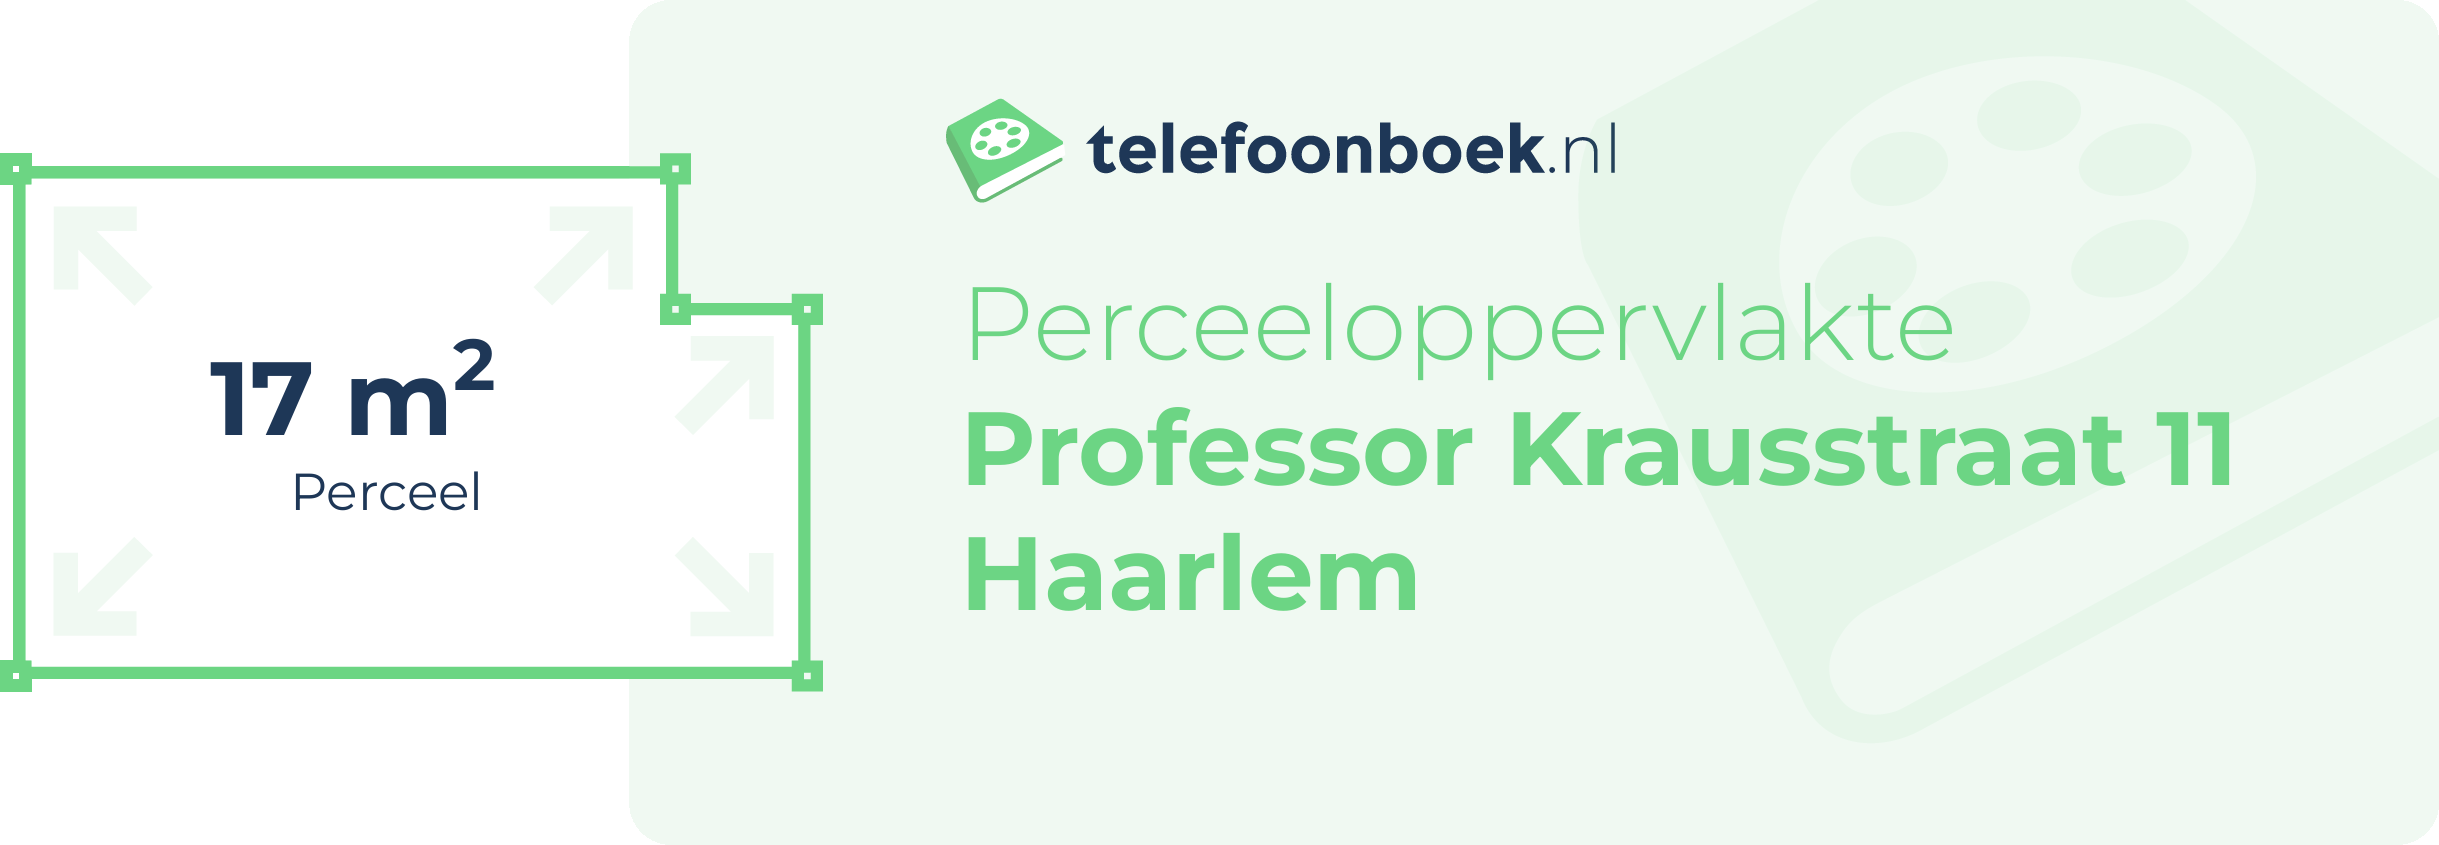 Perceeloppervlakte Professor Krausstraat 11 Haarlem